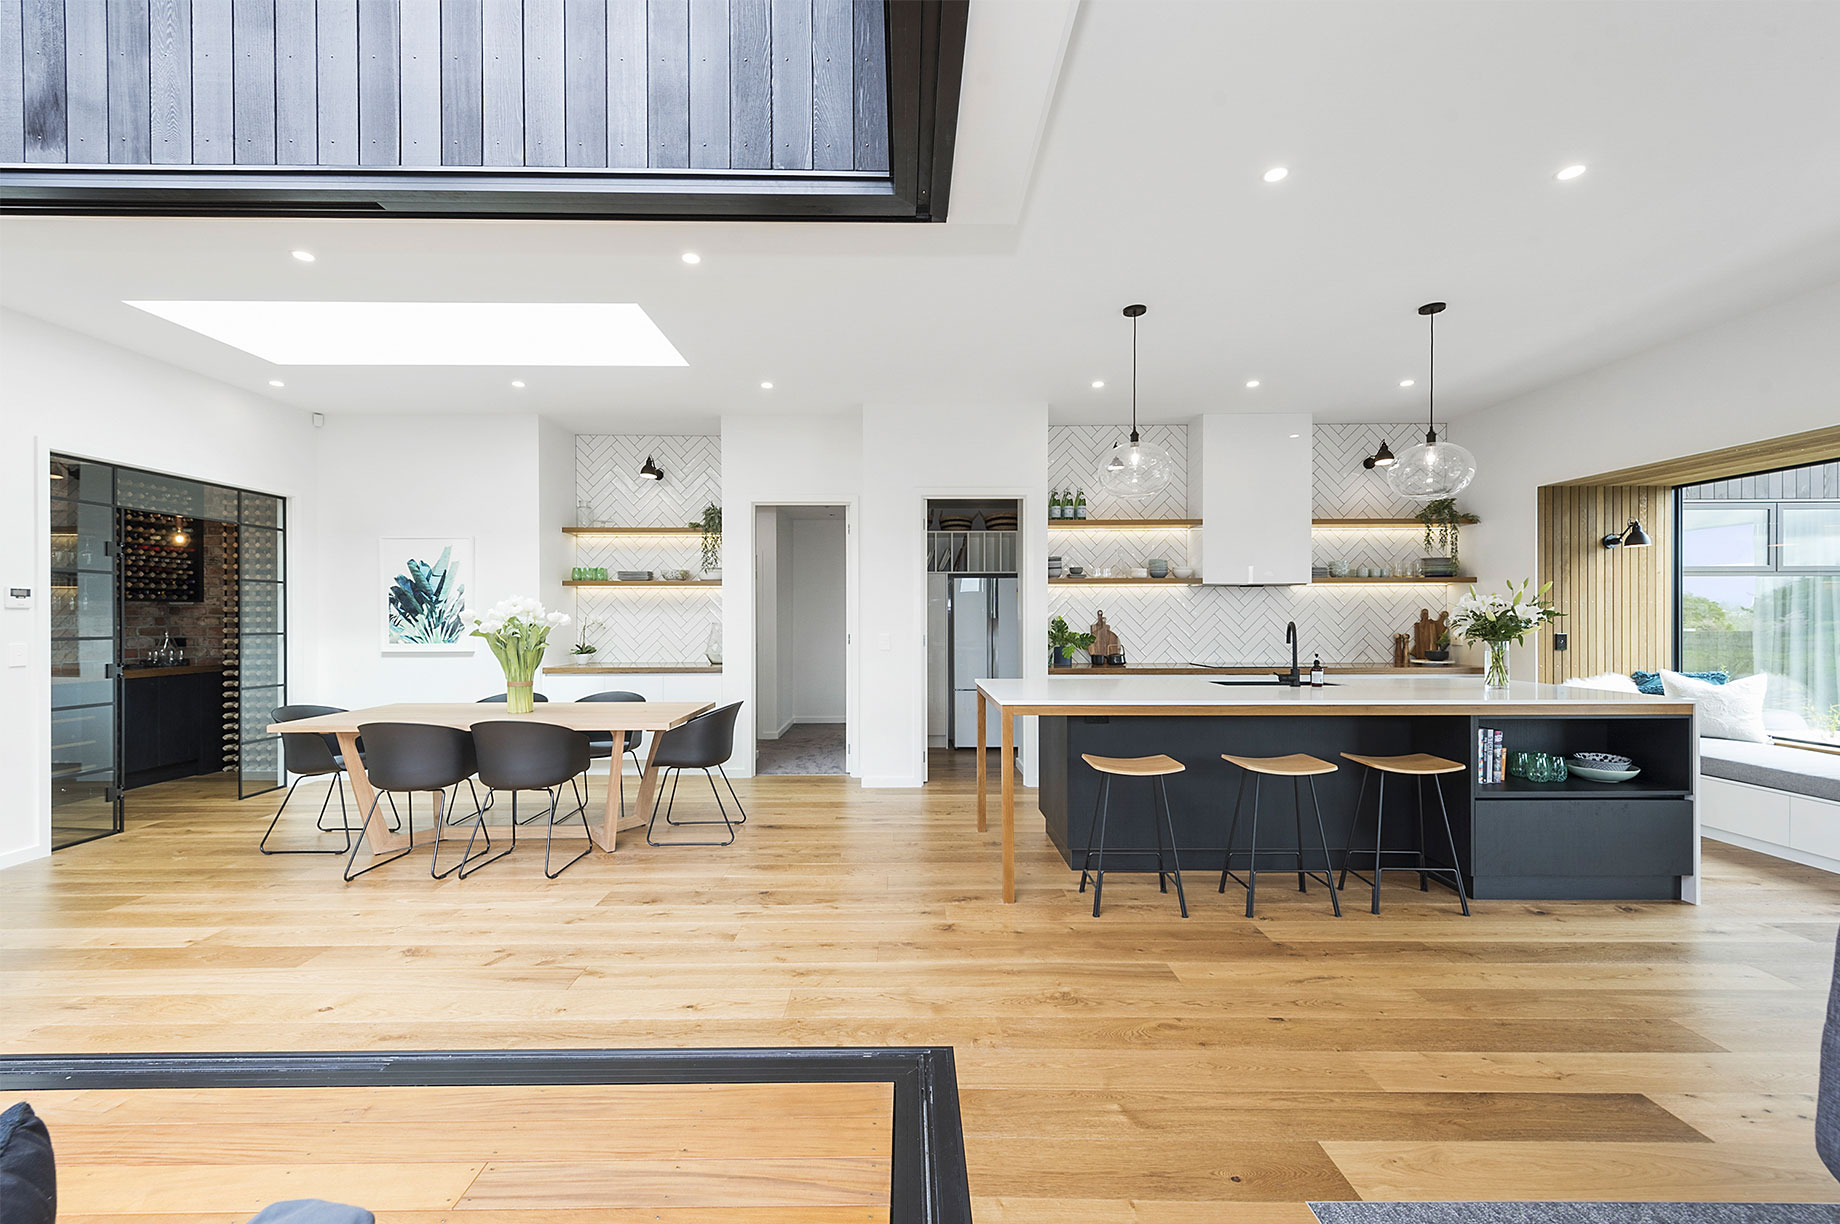 Waikato show home living space interior